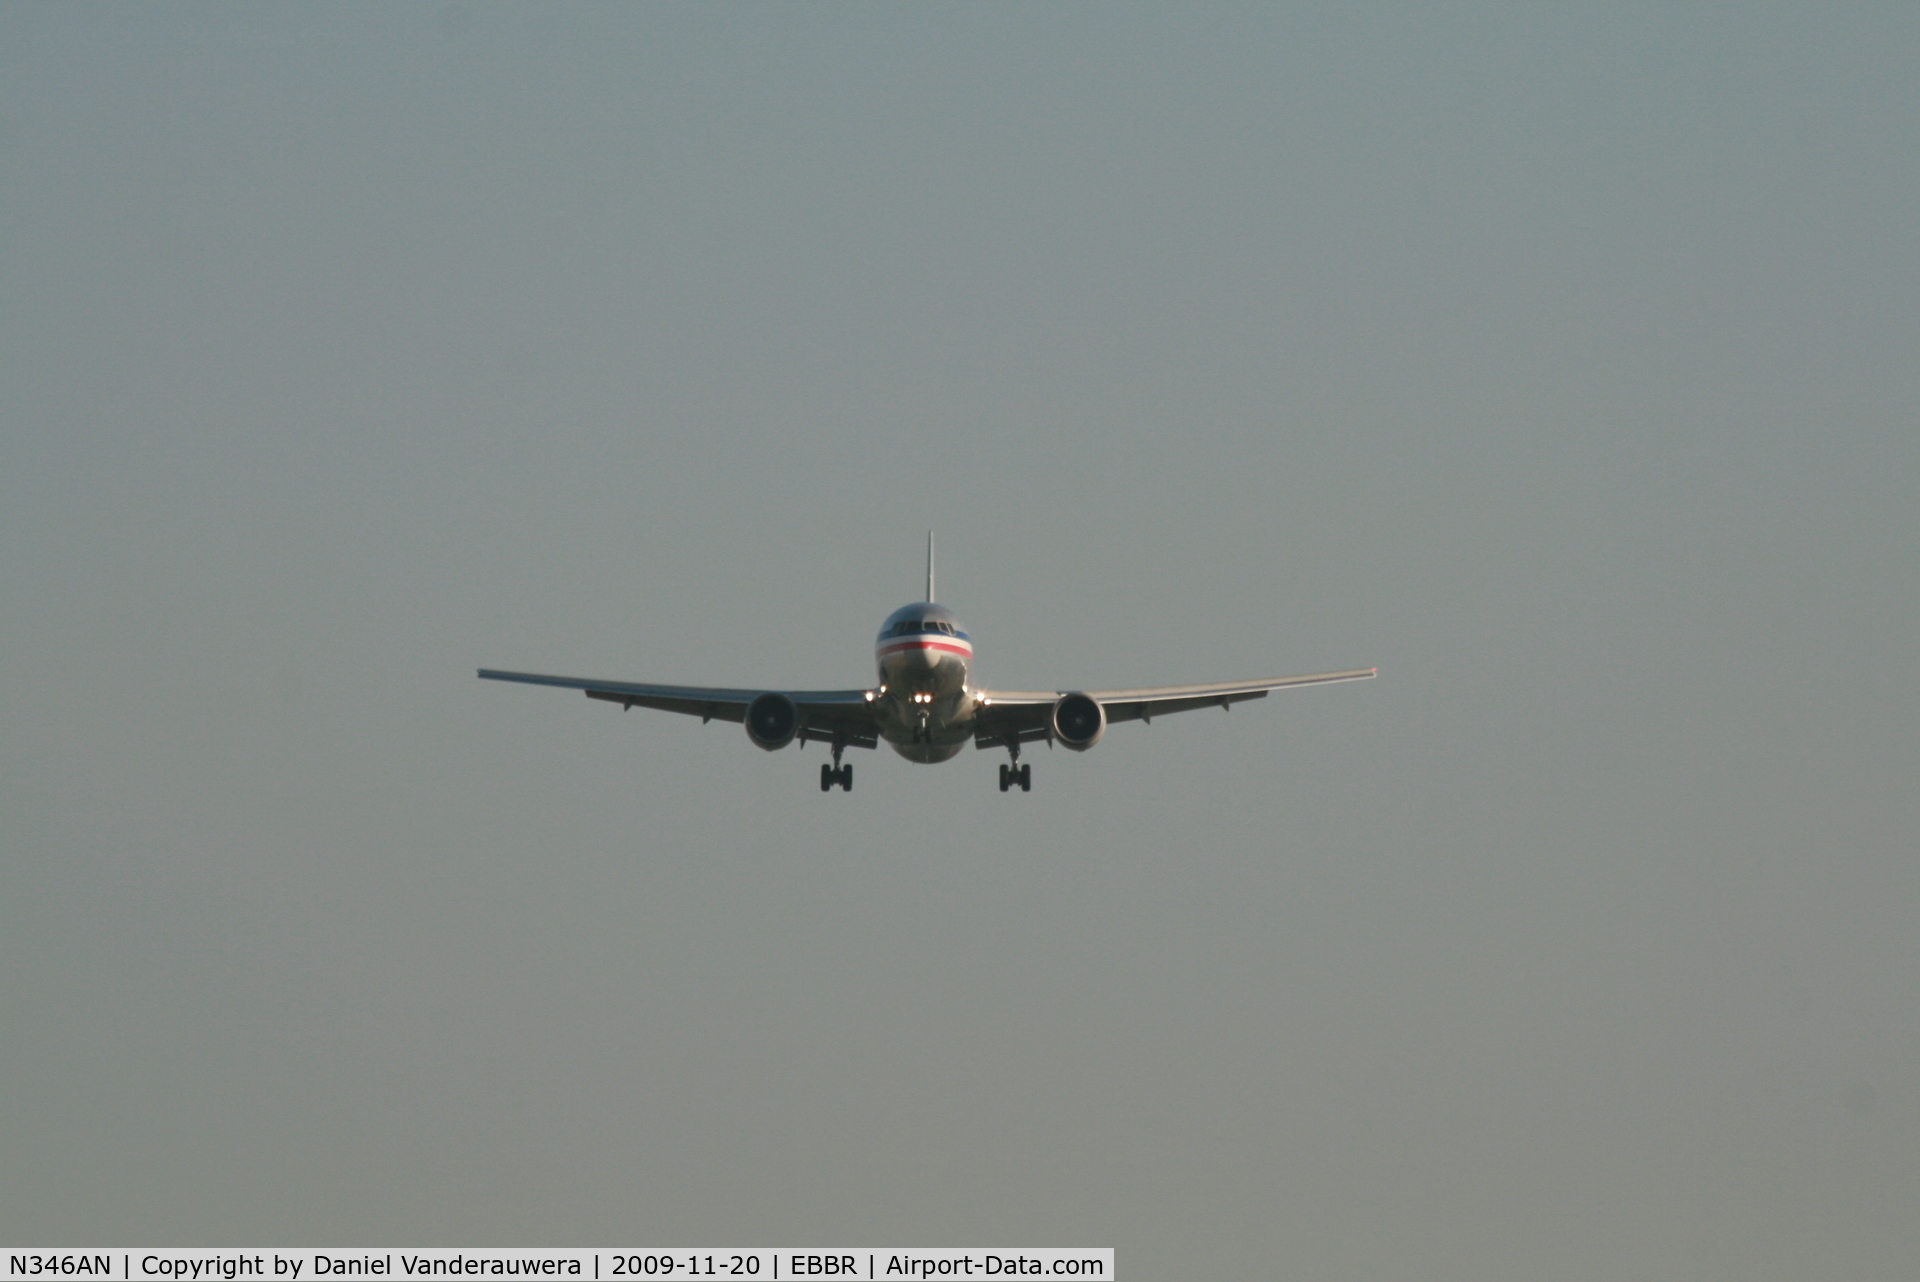 N346AN, 2003 Boeing 767-323 C/N 33085, Arrival of flight AA108 to RWY 25L